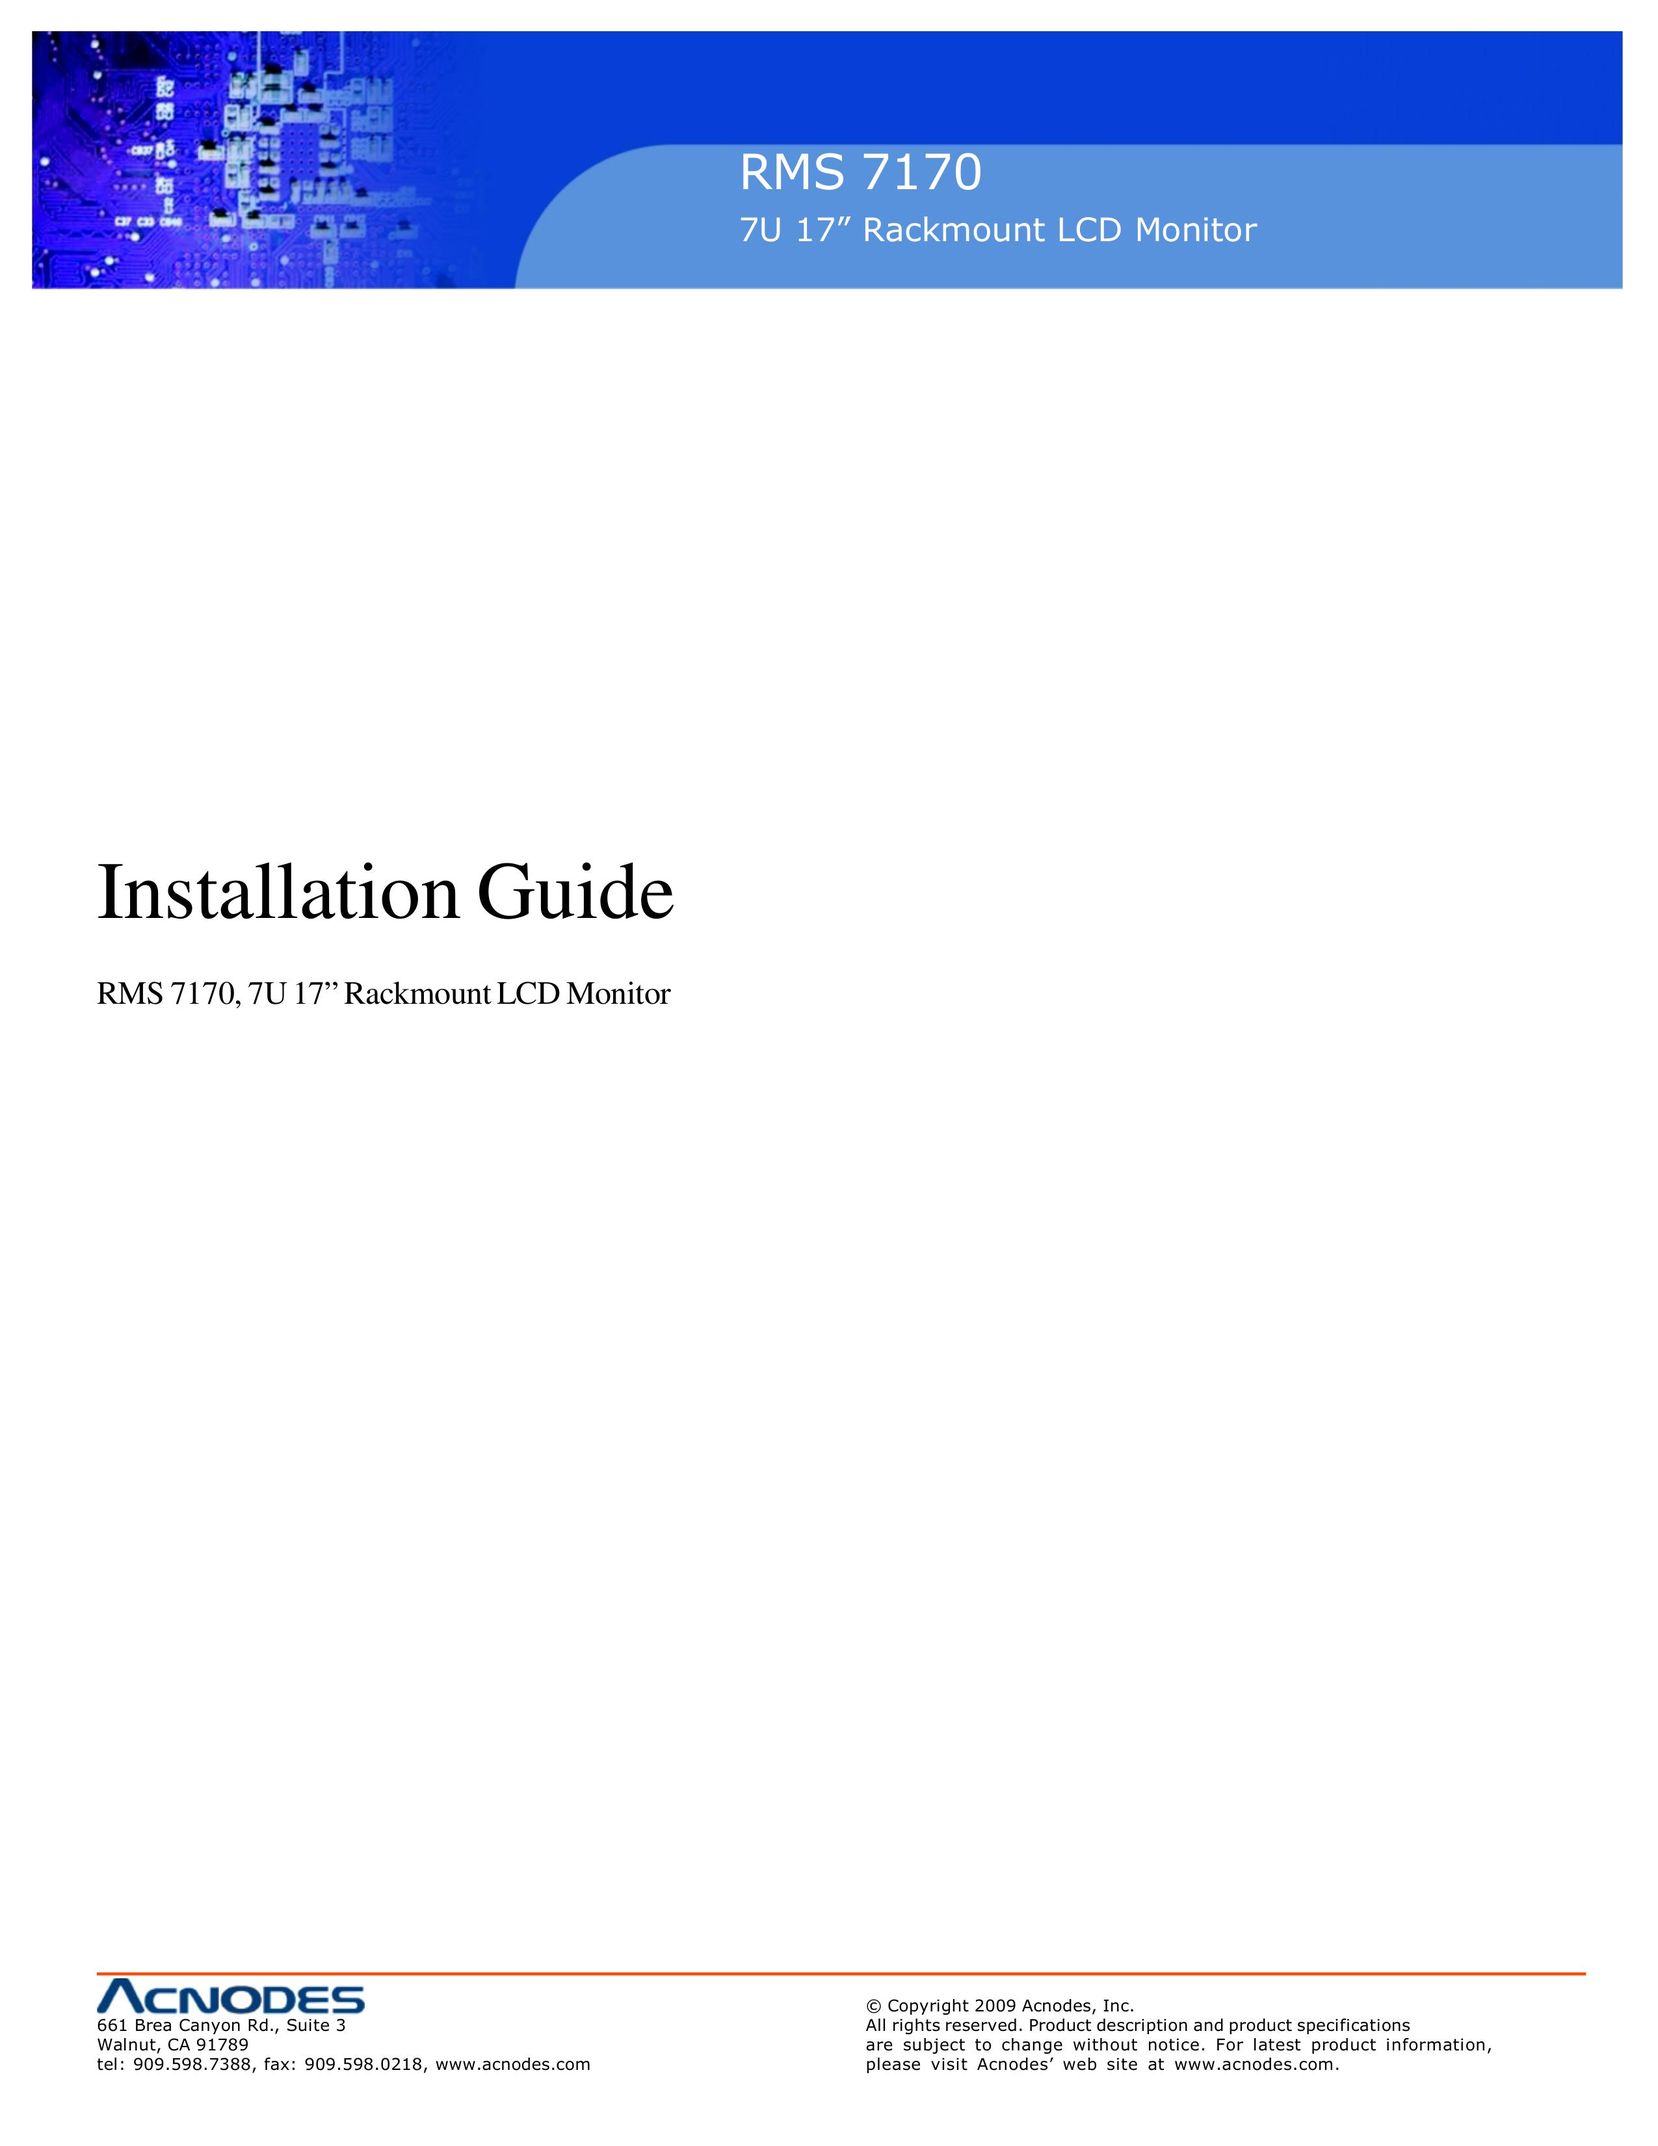 Acnodes 7170 Car Video System User Manual